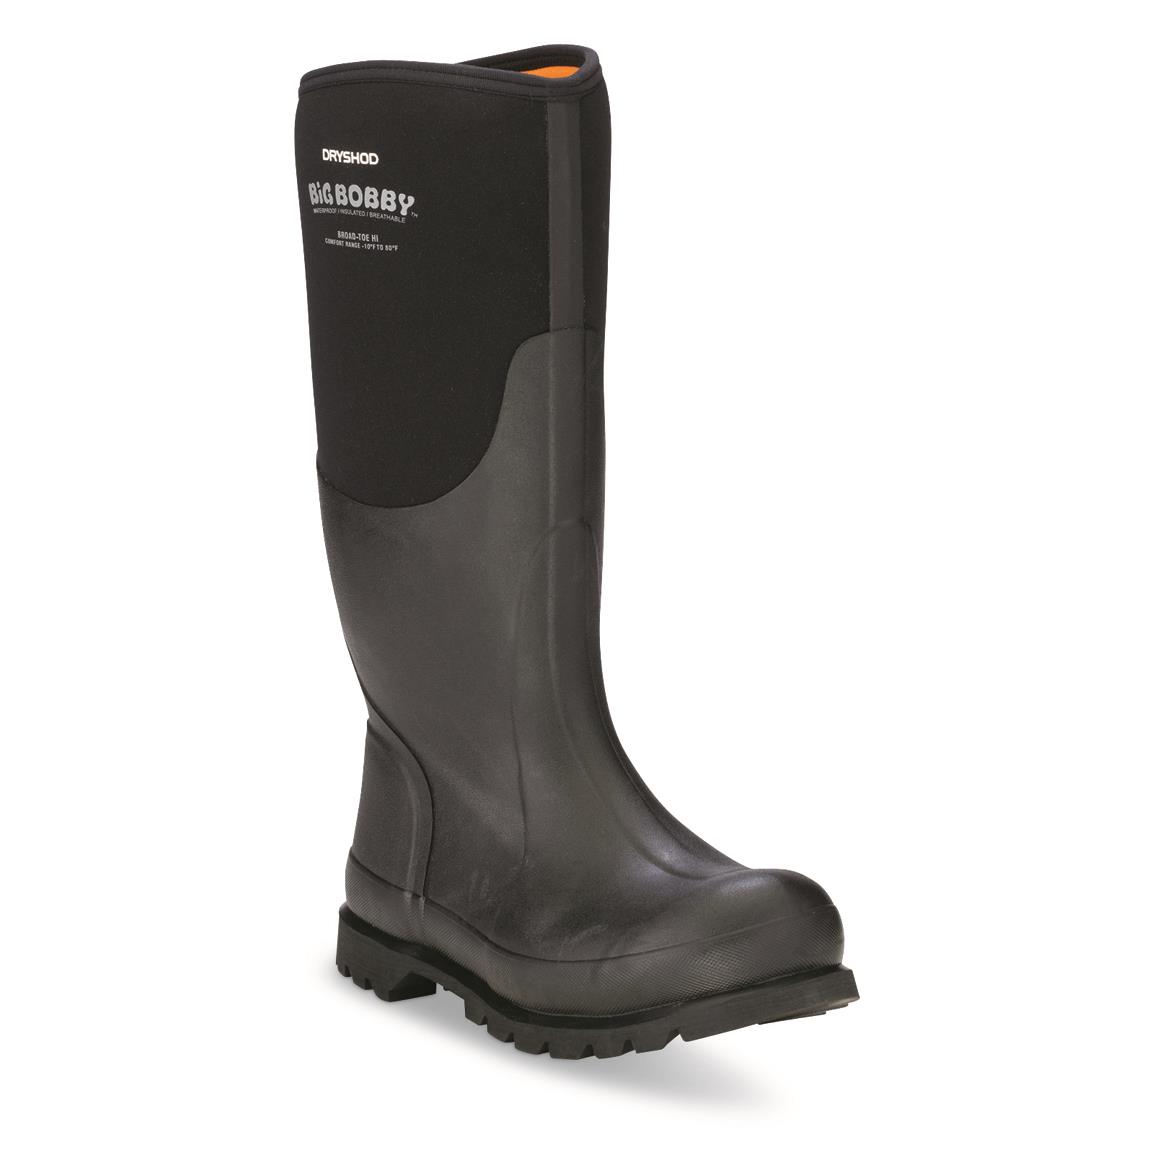 DryShod Men's Big Bobby High Rubber Winter Work Boots, -20°F, Black